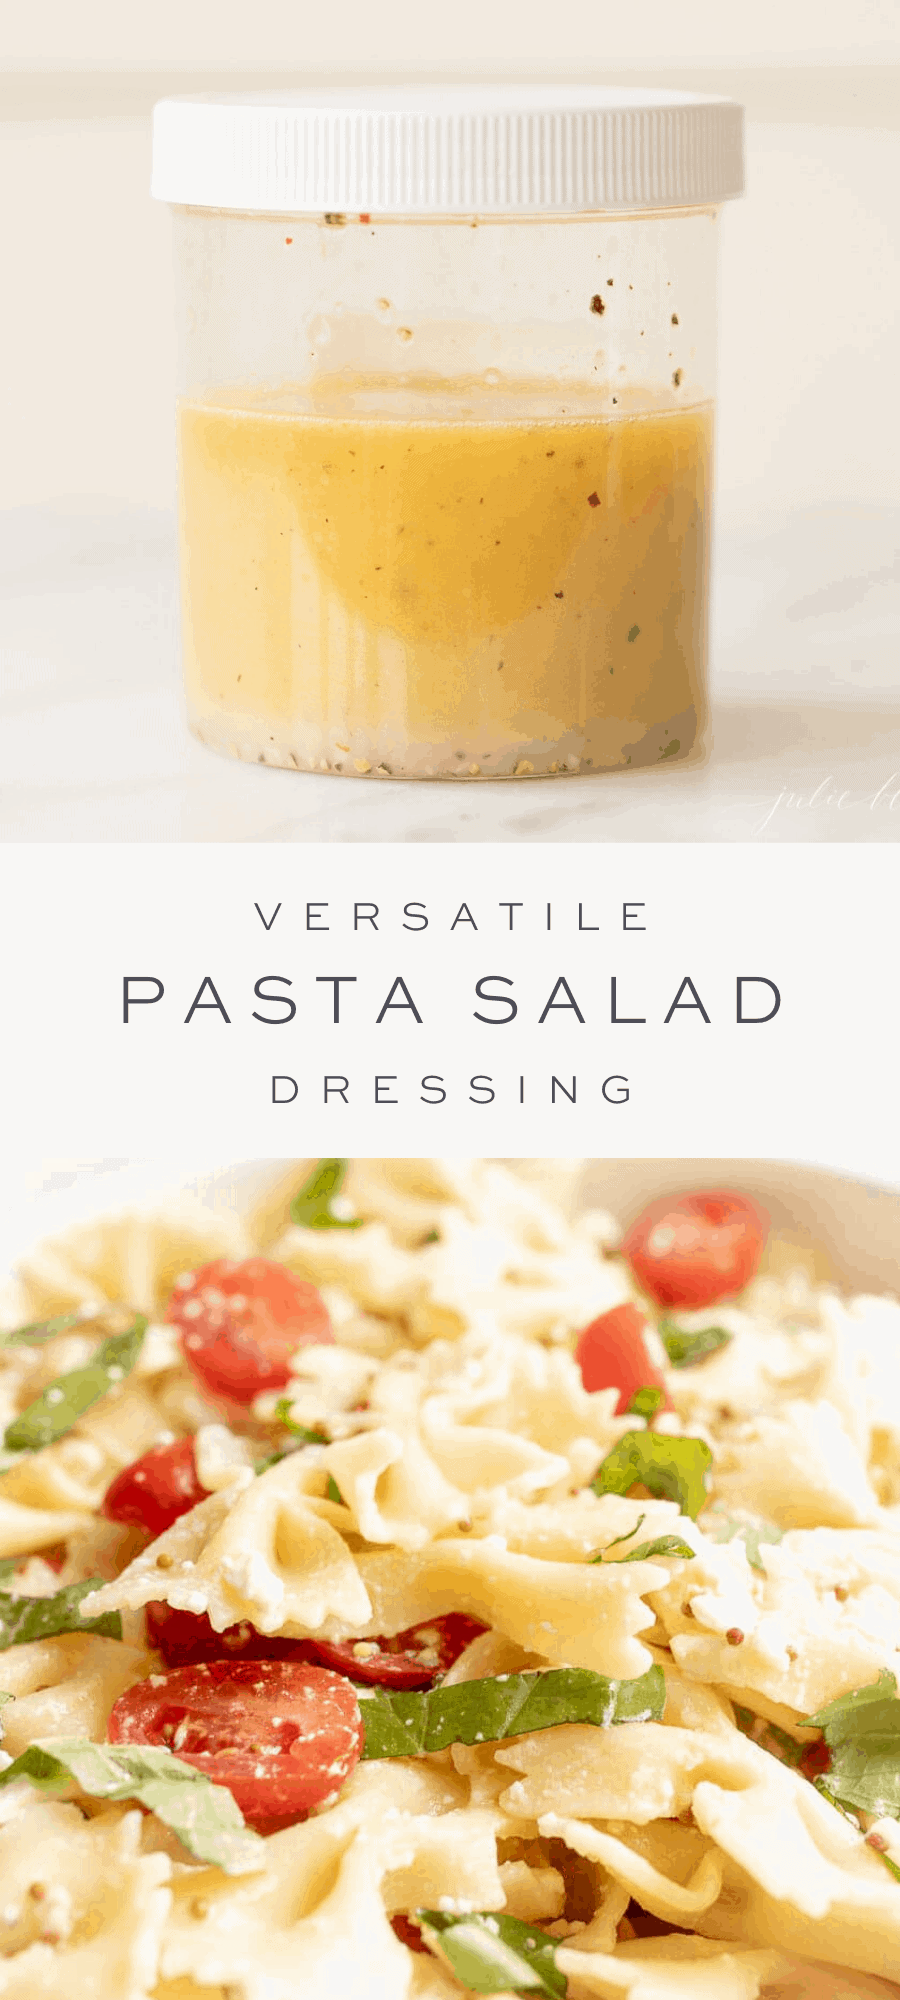 Versatile Pasta Salad Dressing Recipe | Julie Blanner